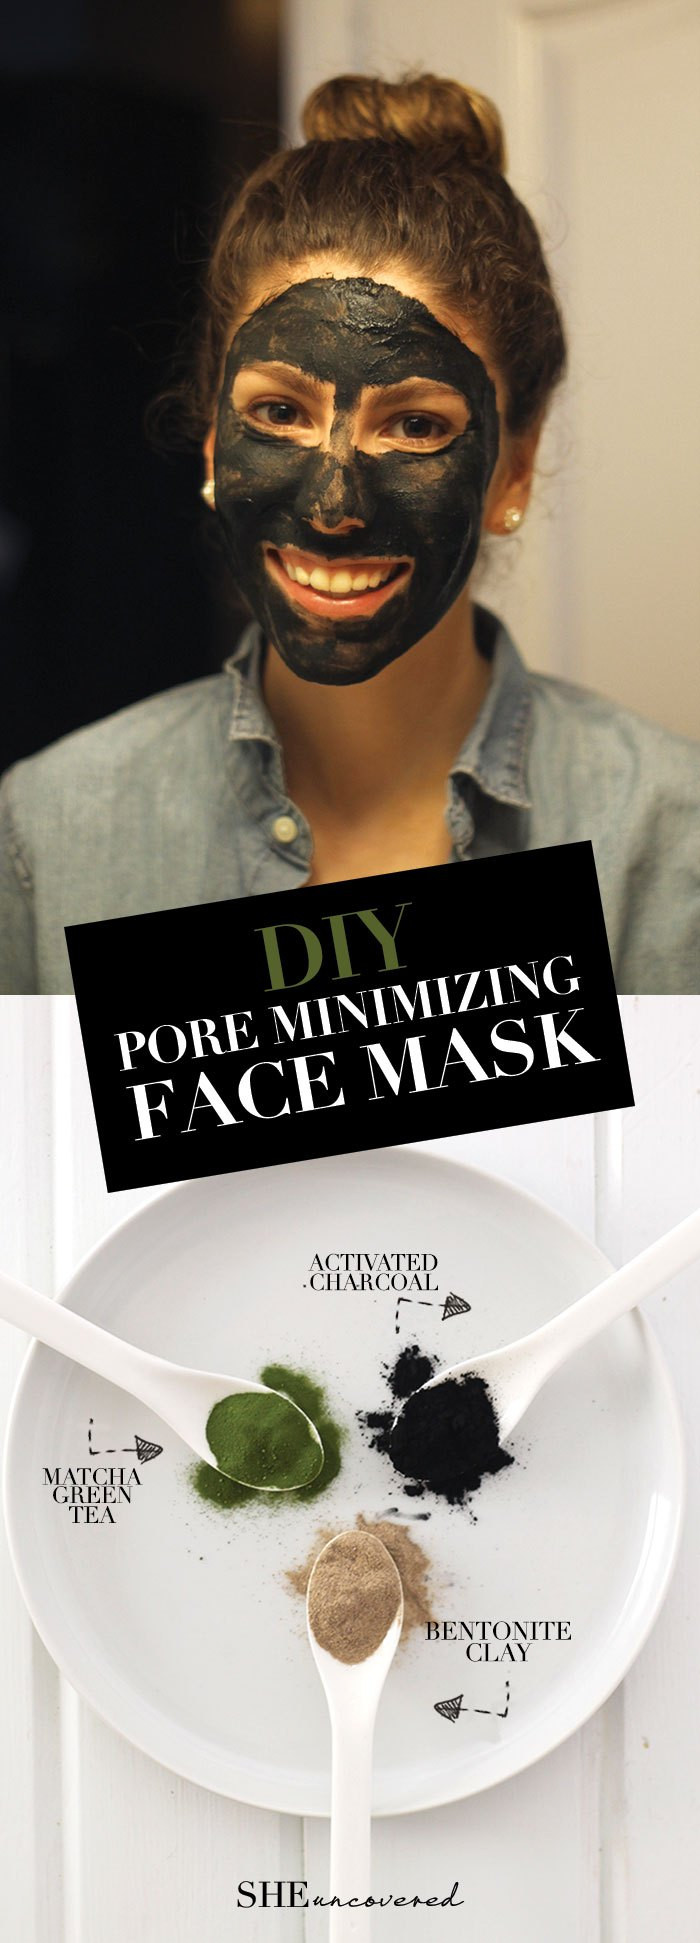 Best ideas about Pore Minimizing Mask DIY
. Save or Pin DIY Pore Minimizing Face Mask • She Uncovered Now.